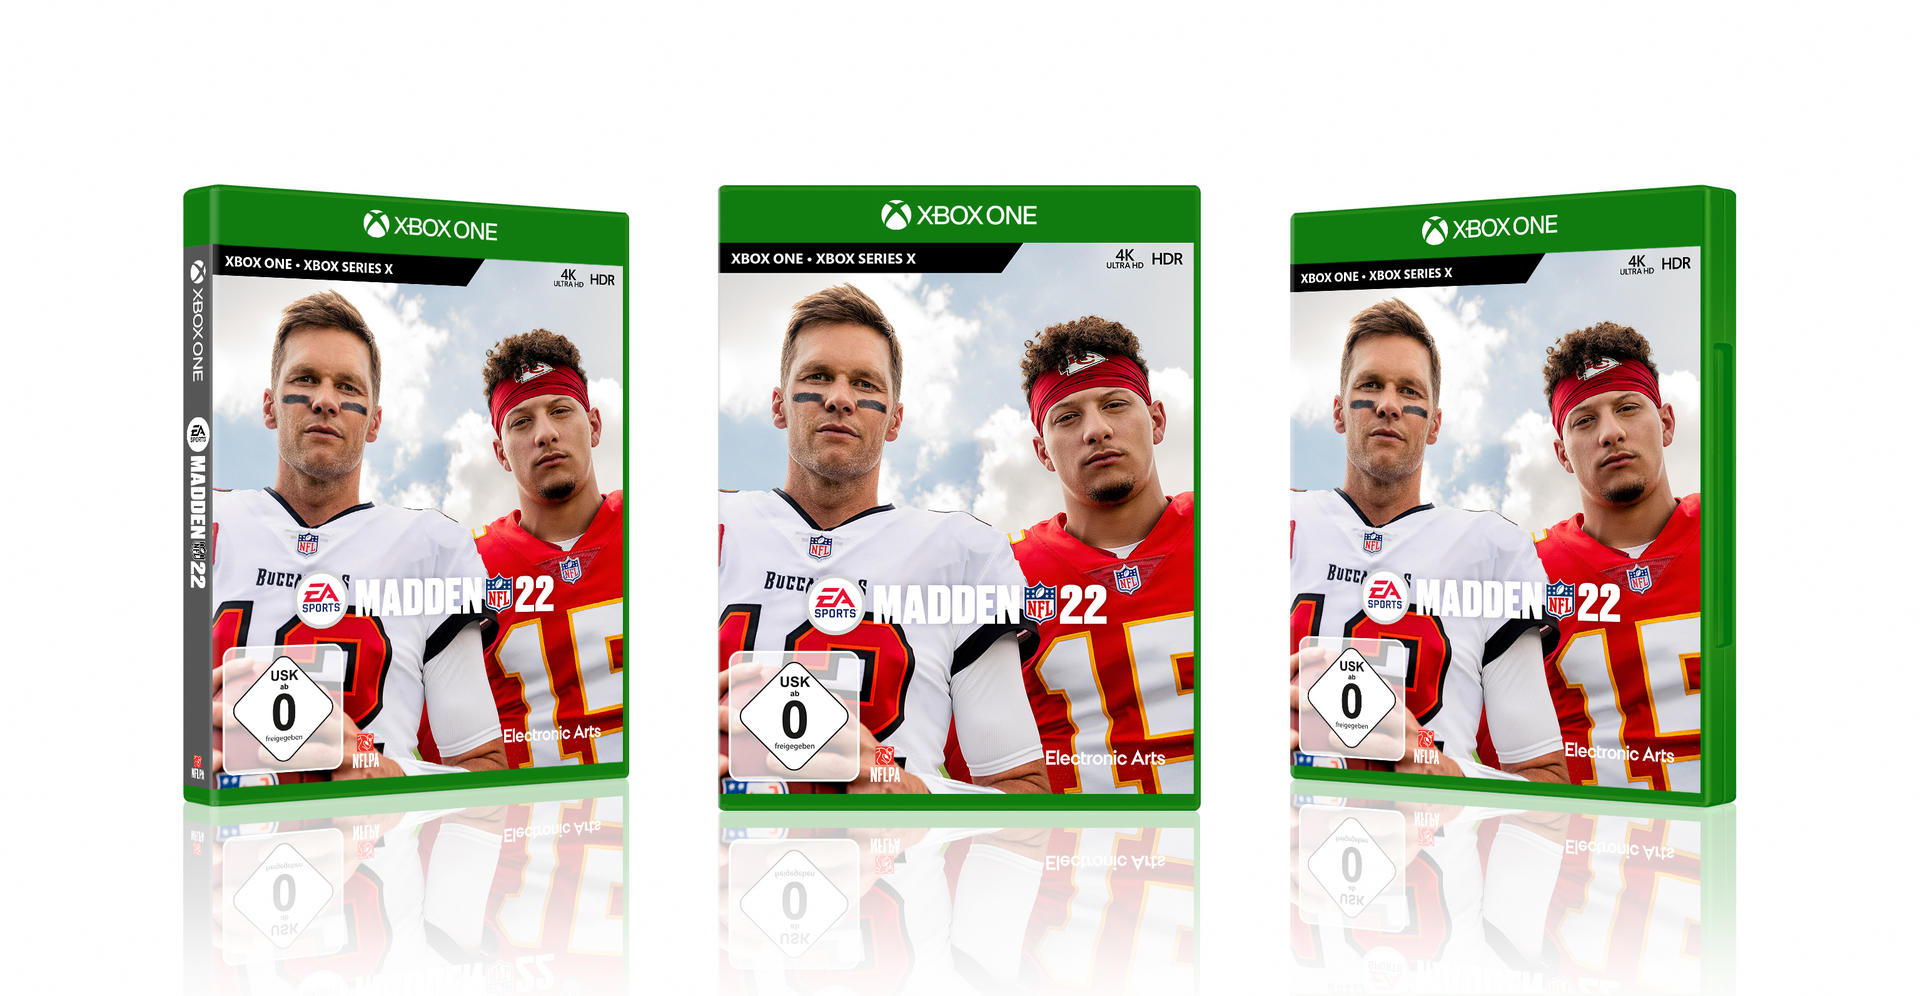 - 22 Madden One] NFL [Xbox